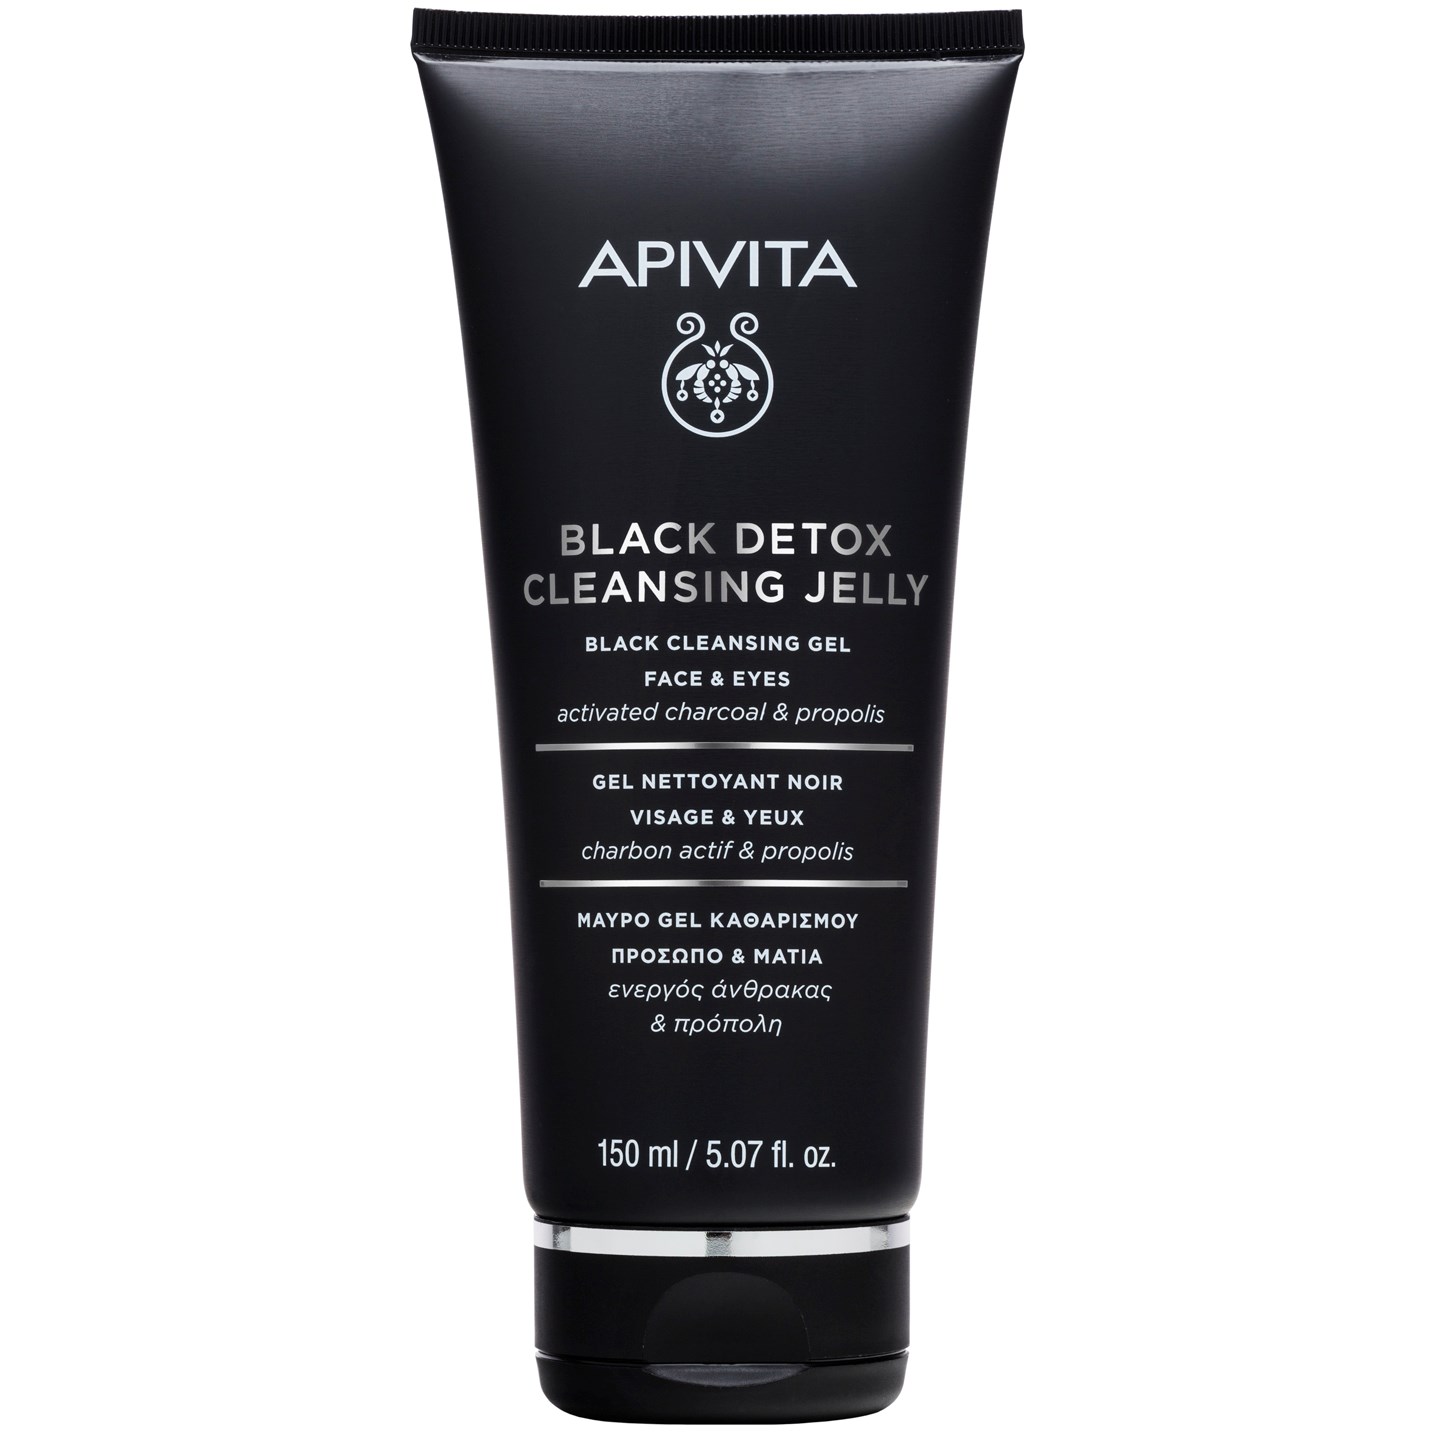 Läs mer om APIVITA Black Detox Cleansing Jelly Black Cleansing Gel – Face & Eyes